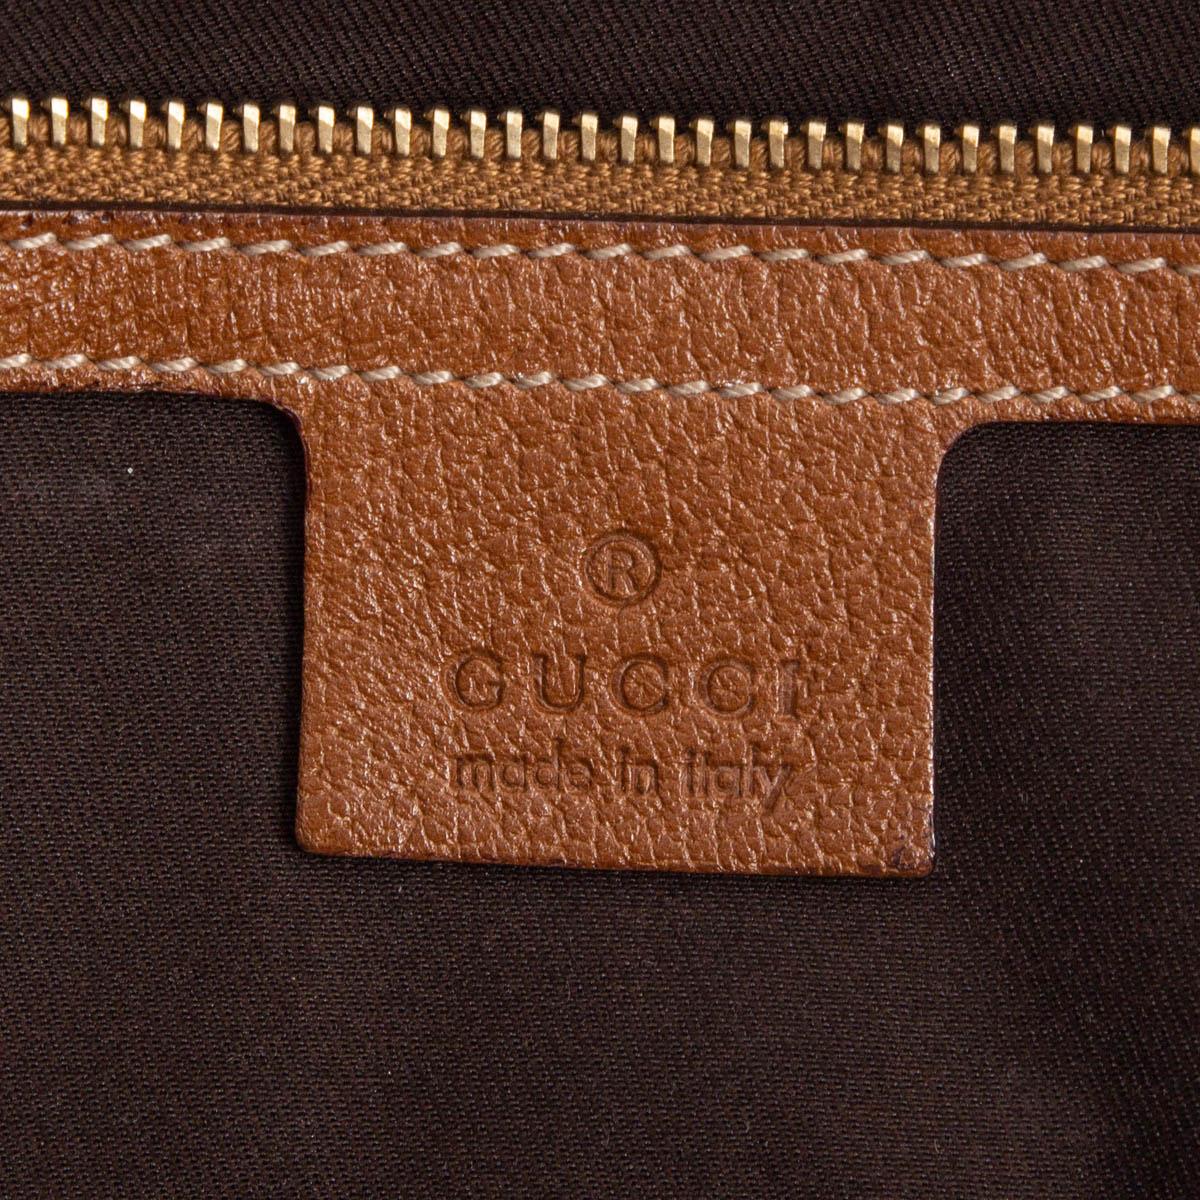 GUCCI brown leather NAILHEAD JACKIE HOBO Shoulder Bag 1